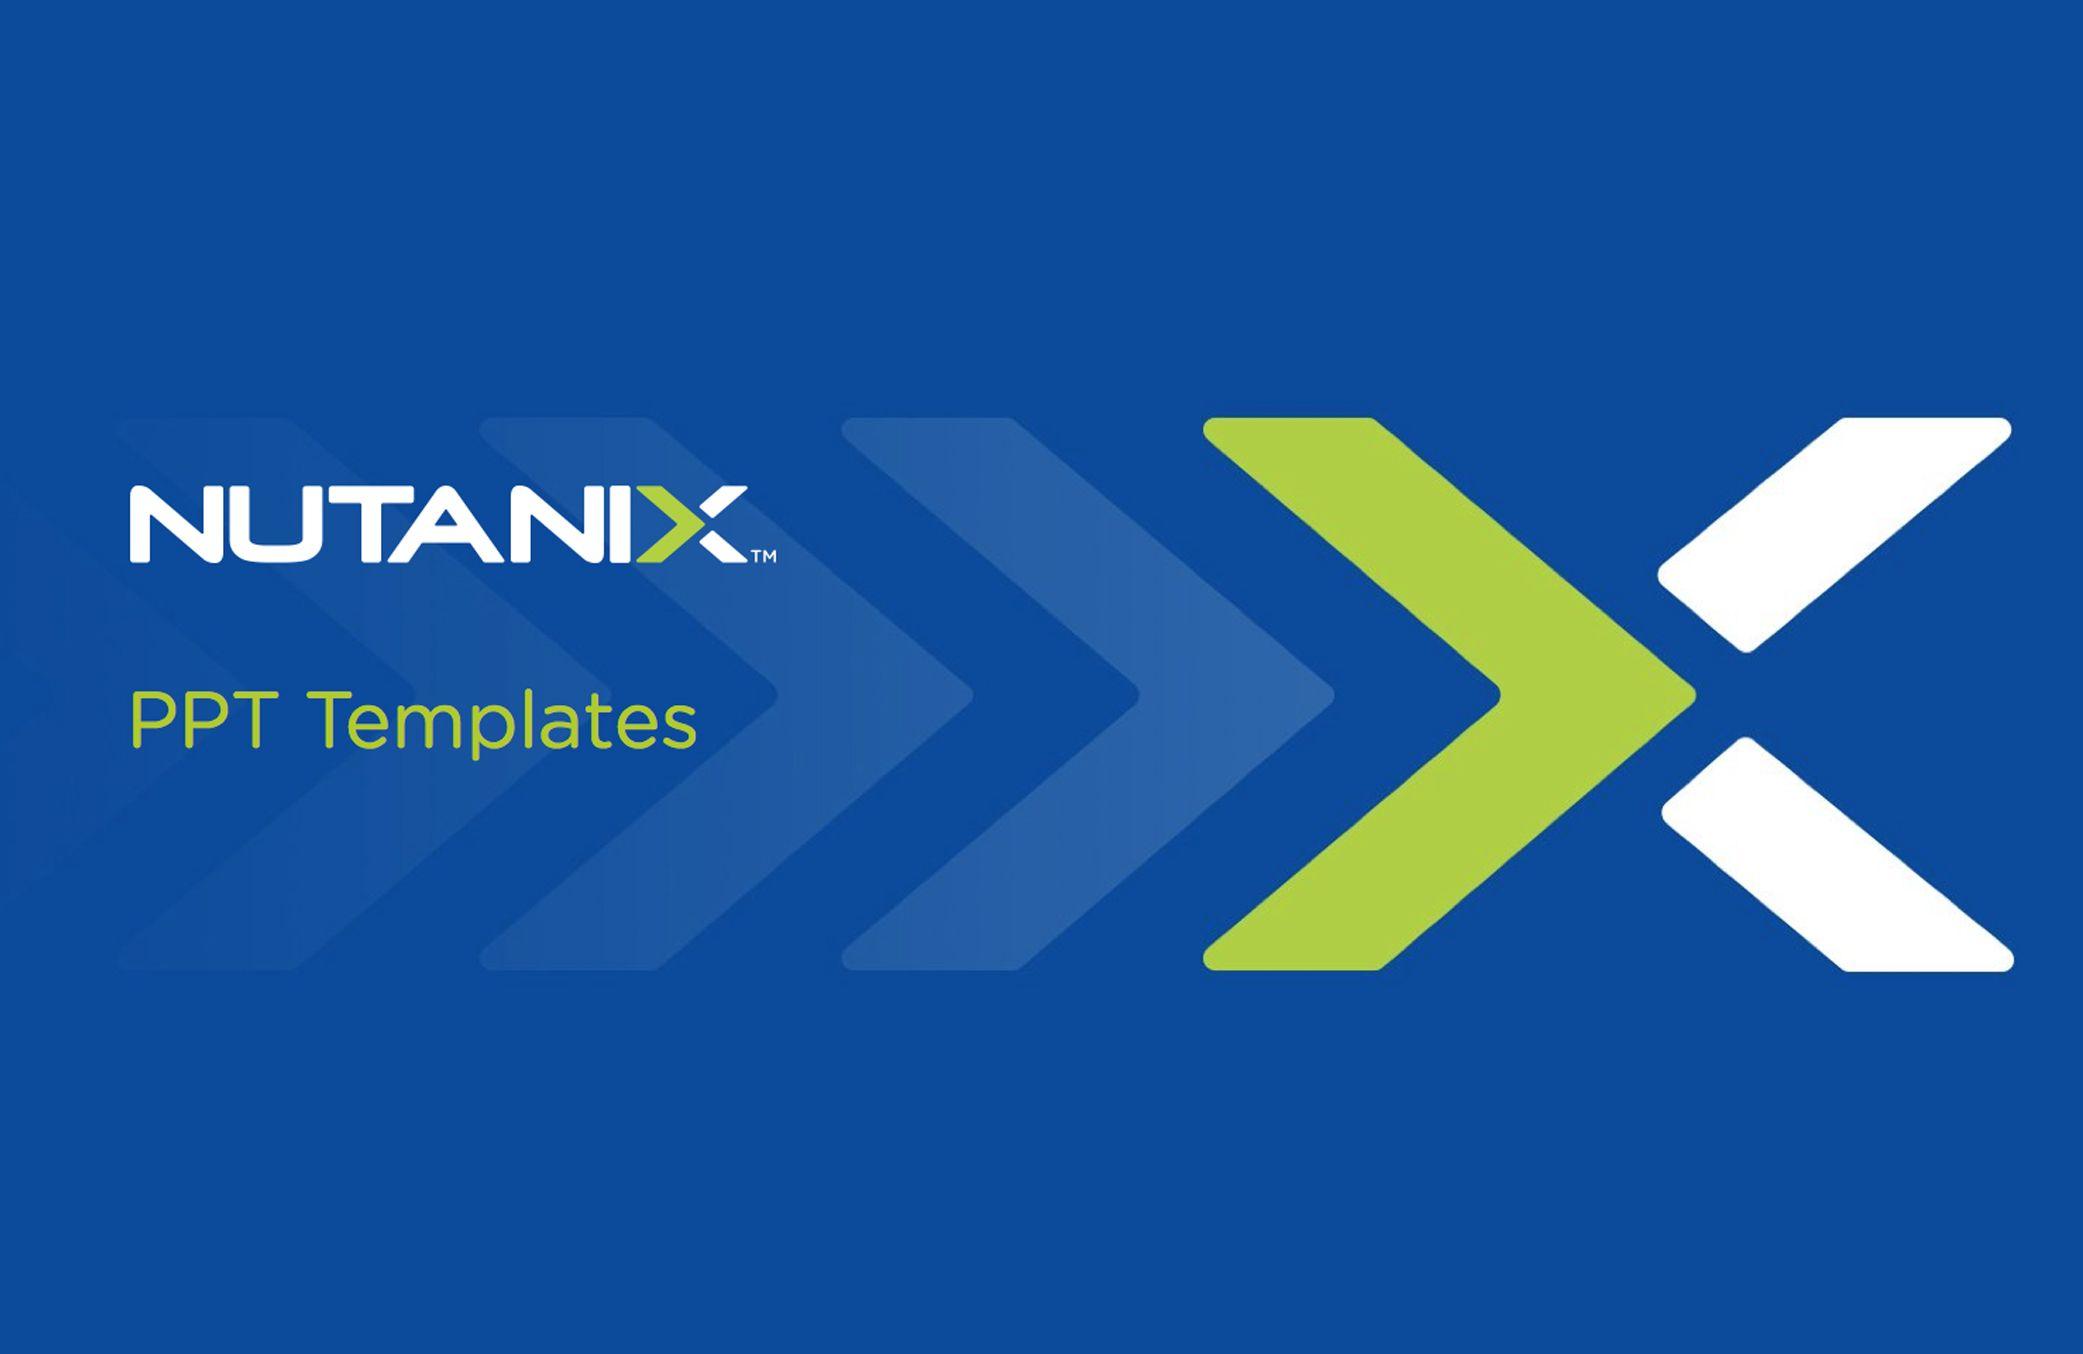 Nutanix Logo - Nutanix Logos